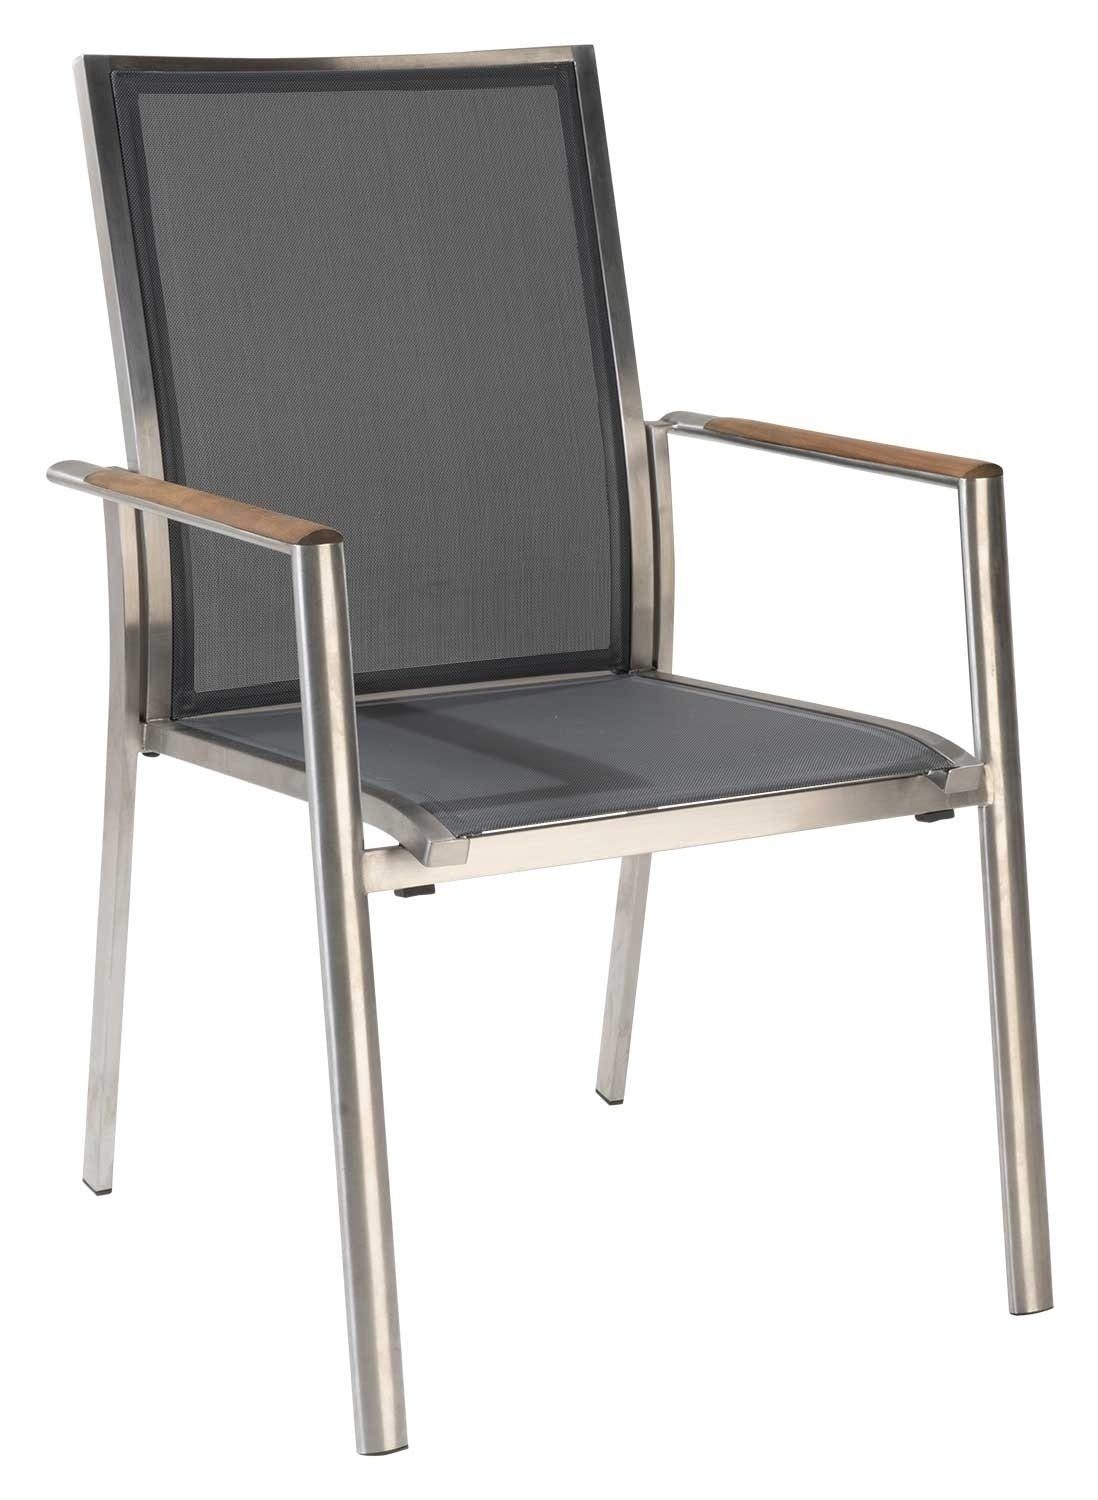 ZEBRA Möbel Gartenstuhl FLY, Edelstahl, Grau, B 62 cm, Textilen, stapelbar | Stühle